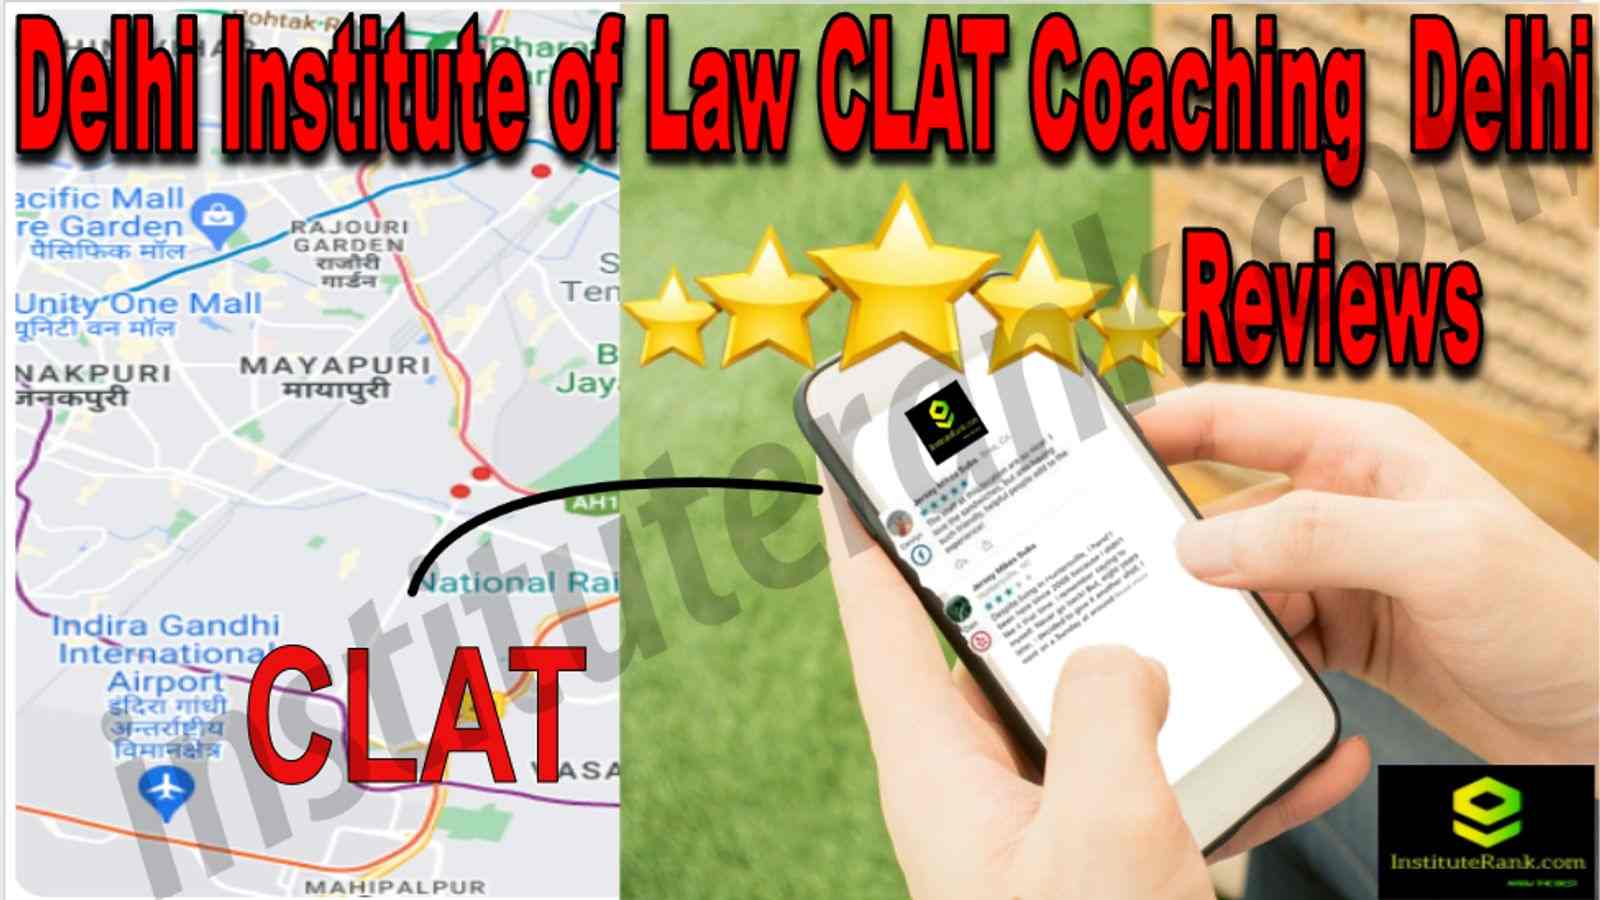 Delhi Institute of Law CLAT Coaching Delhi Reviews